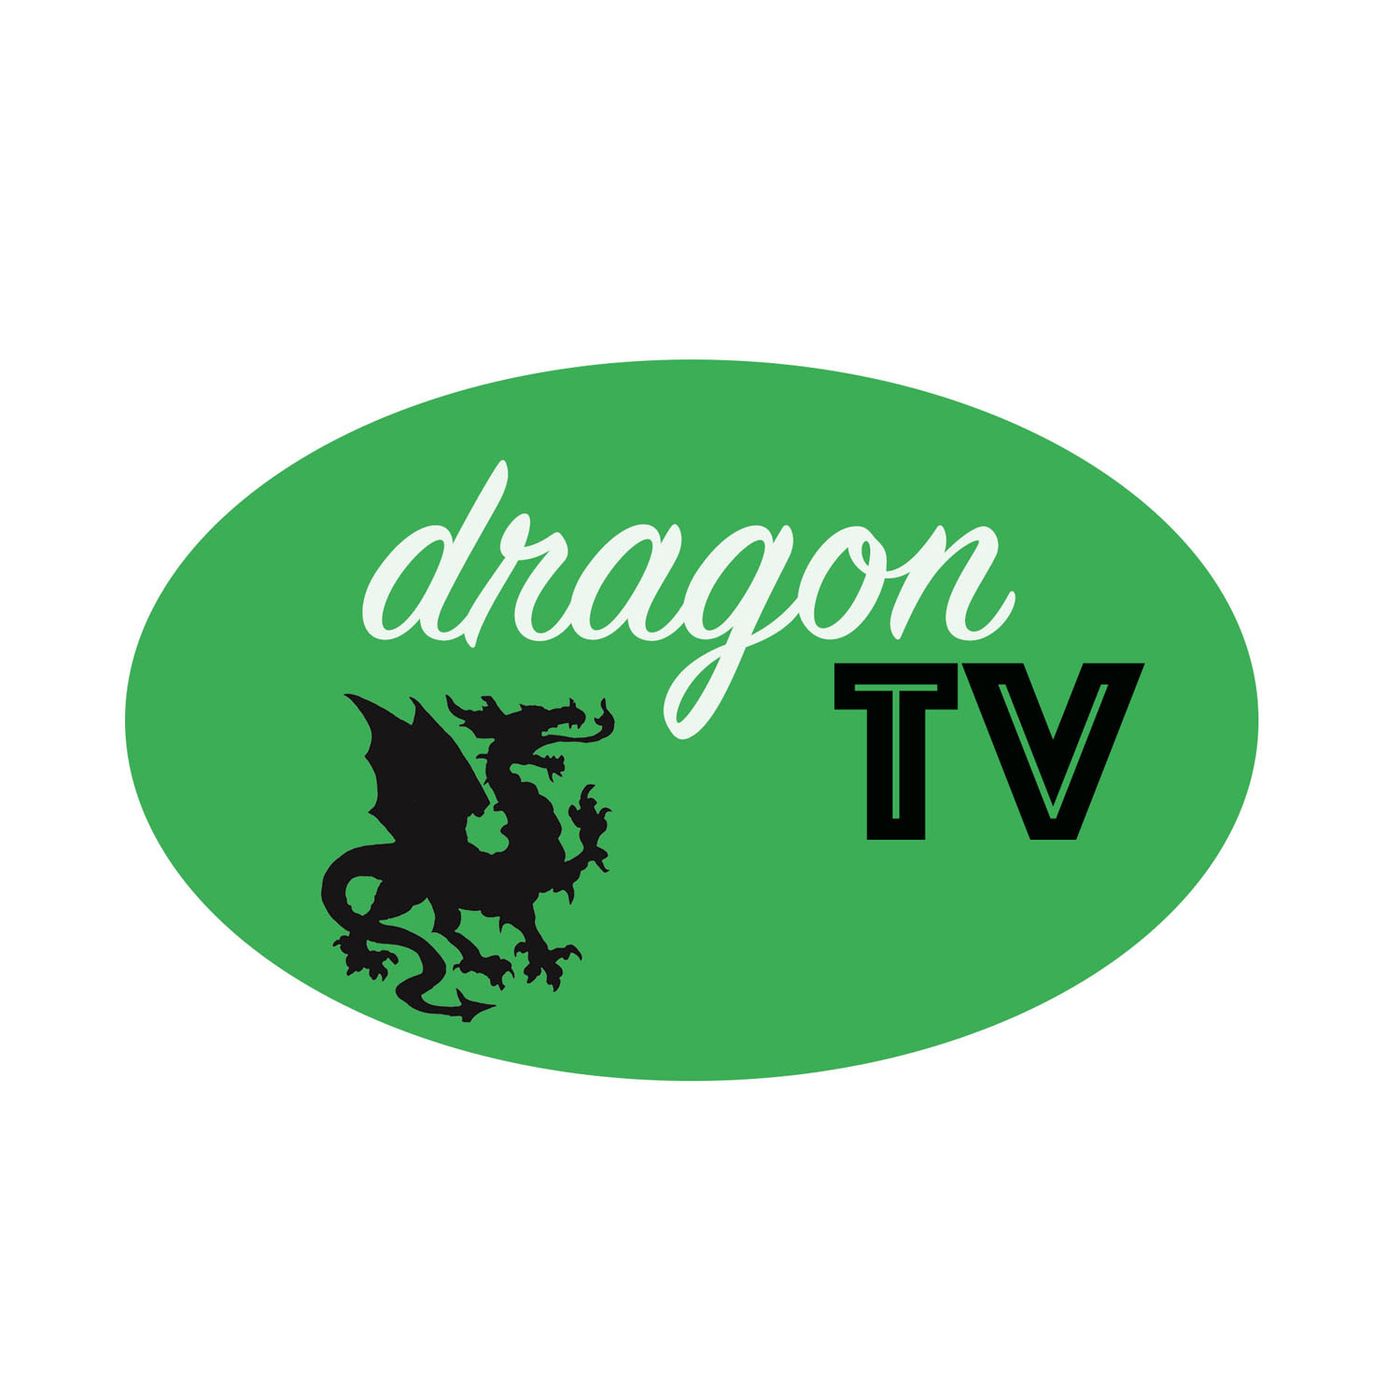 Dragon TV